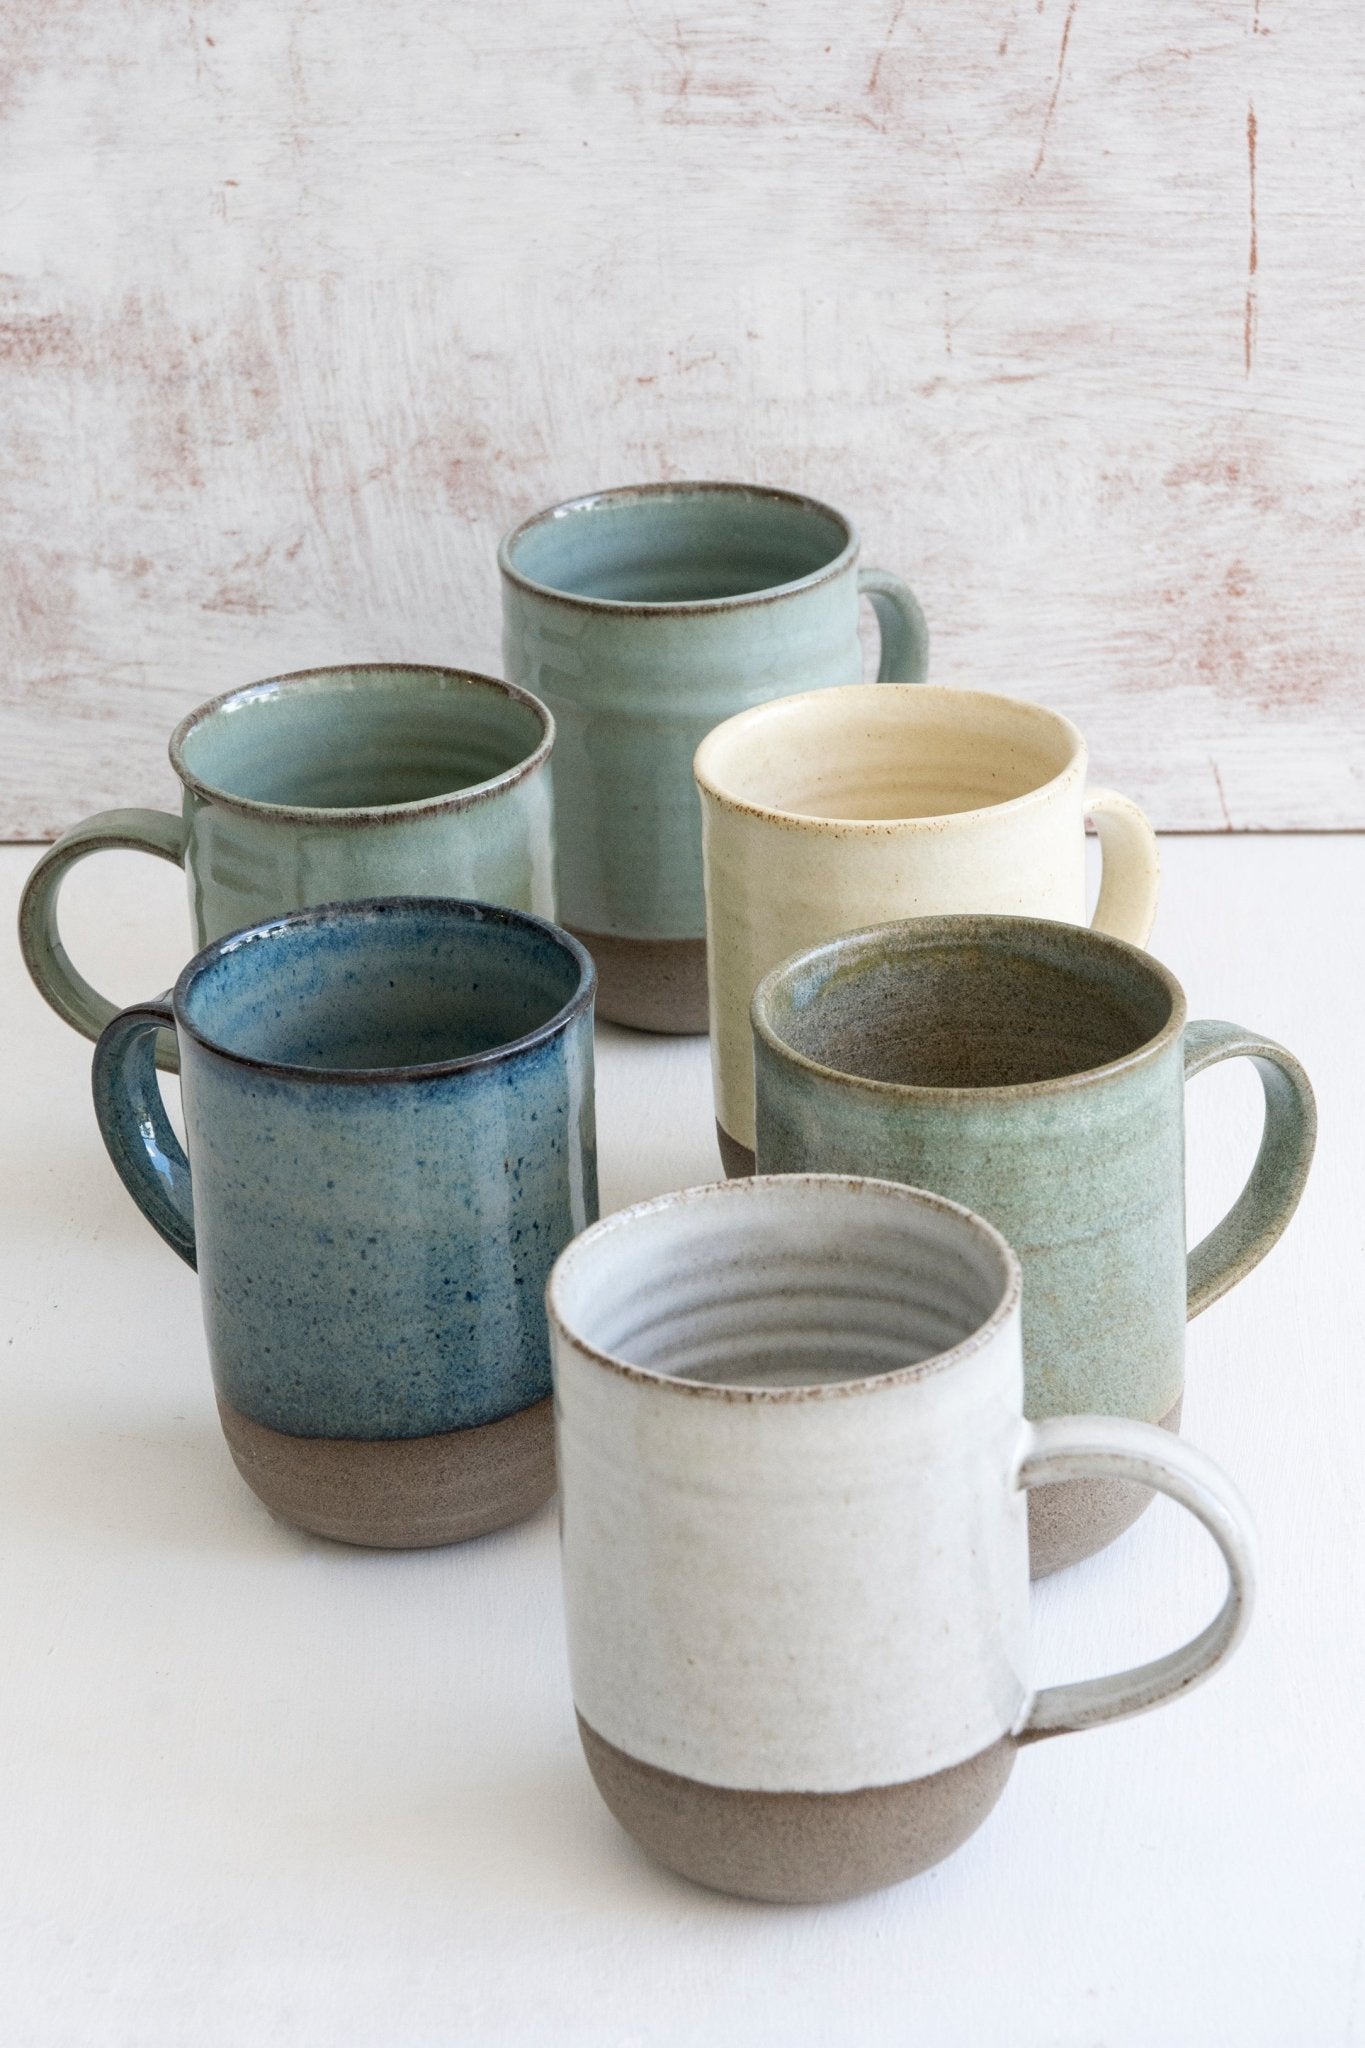 Large modern coffee mug/Tall ceramic mug